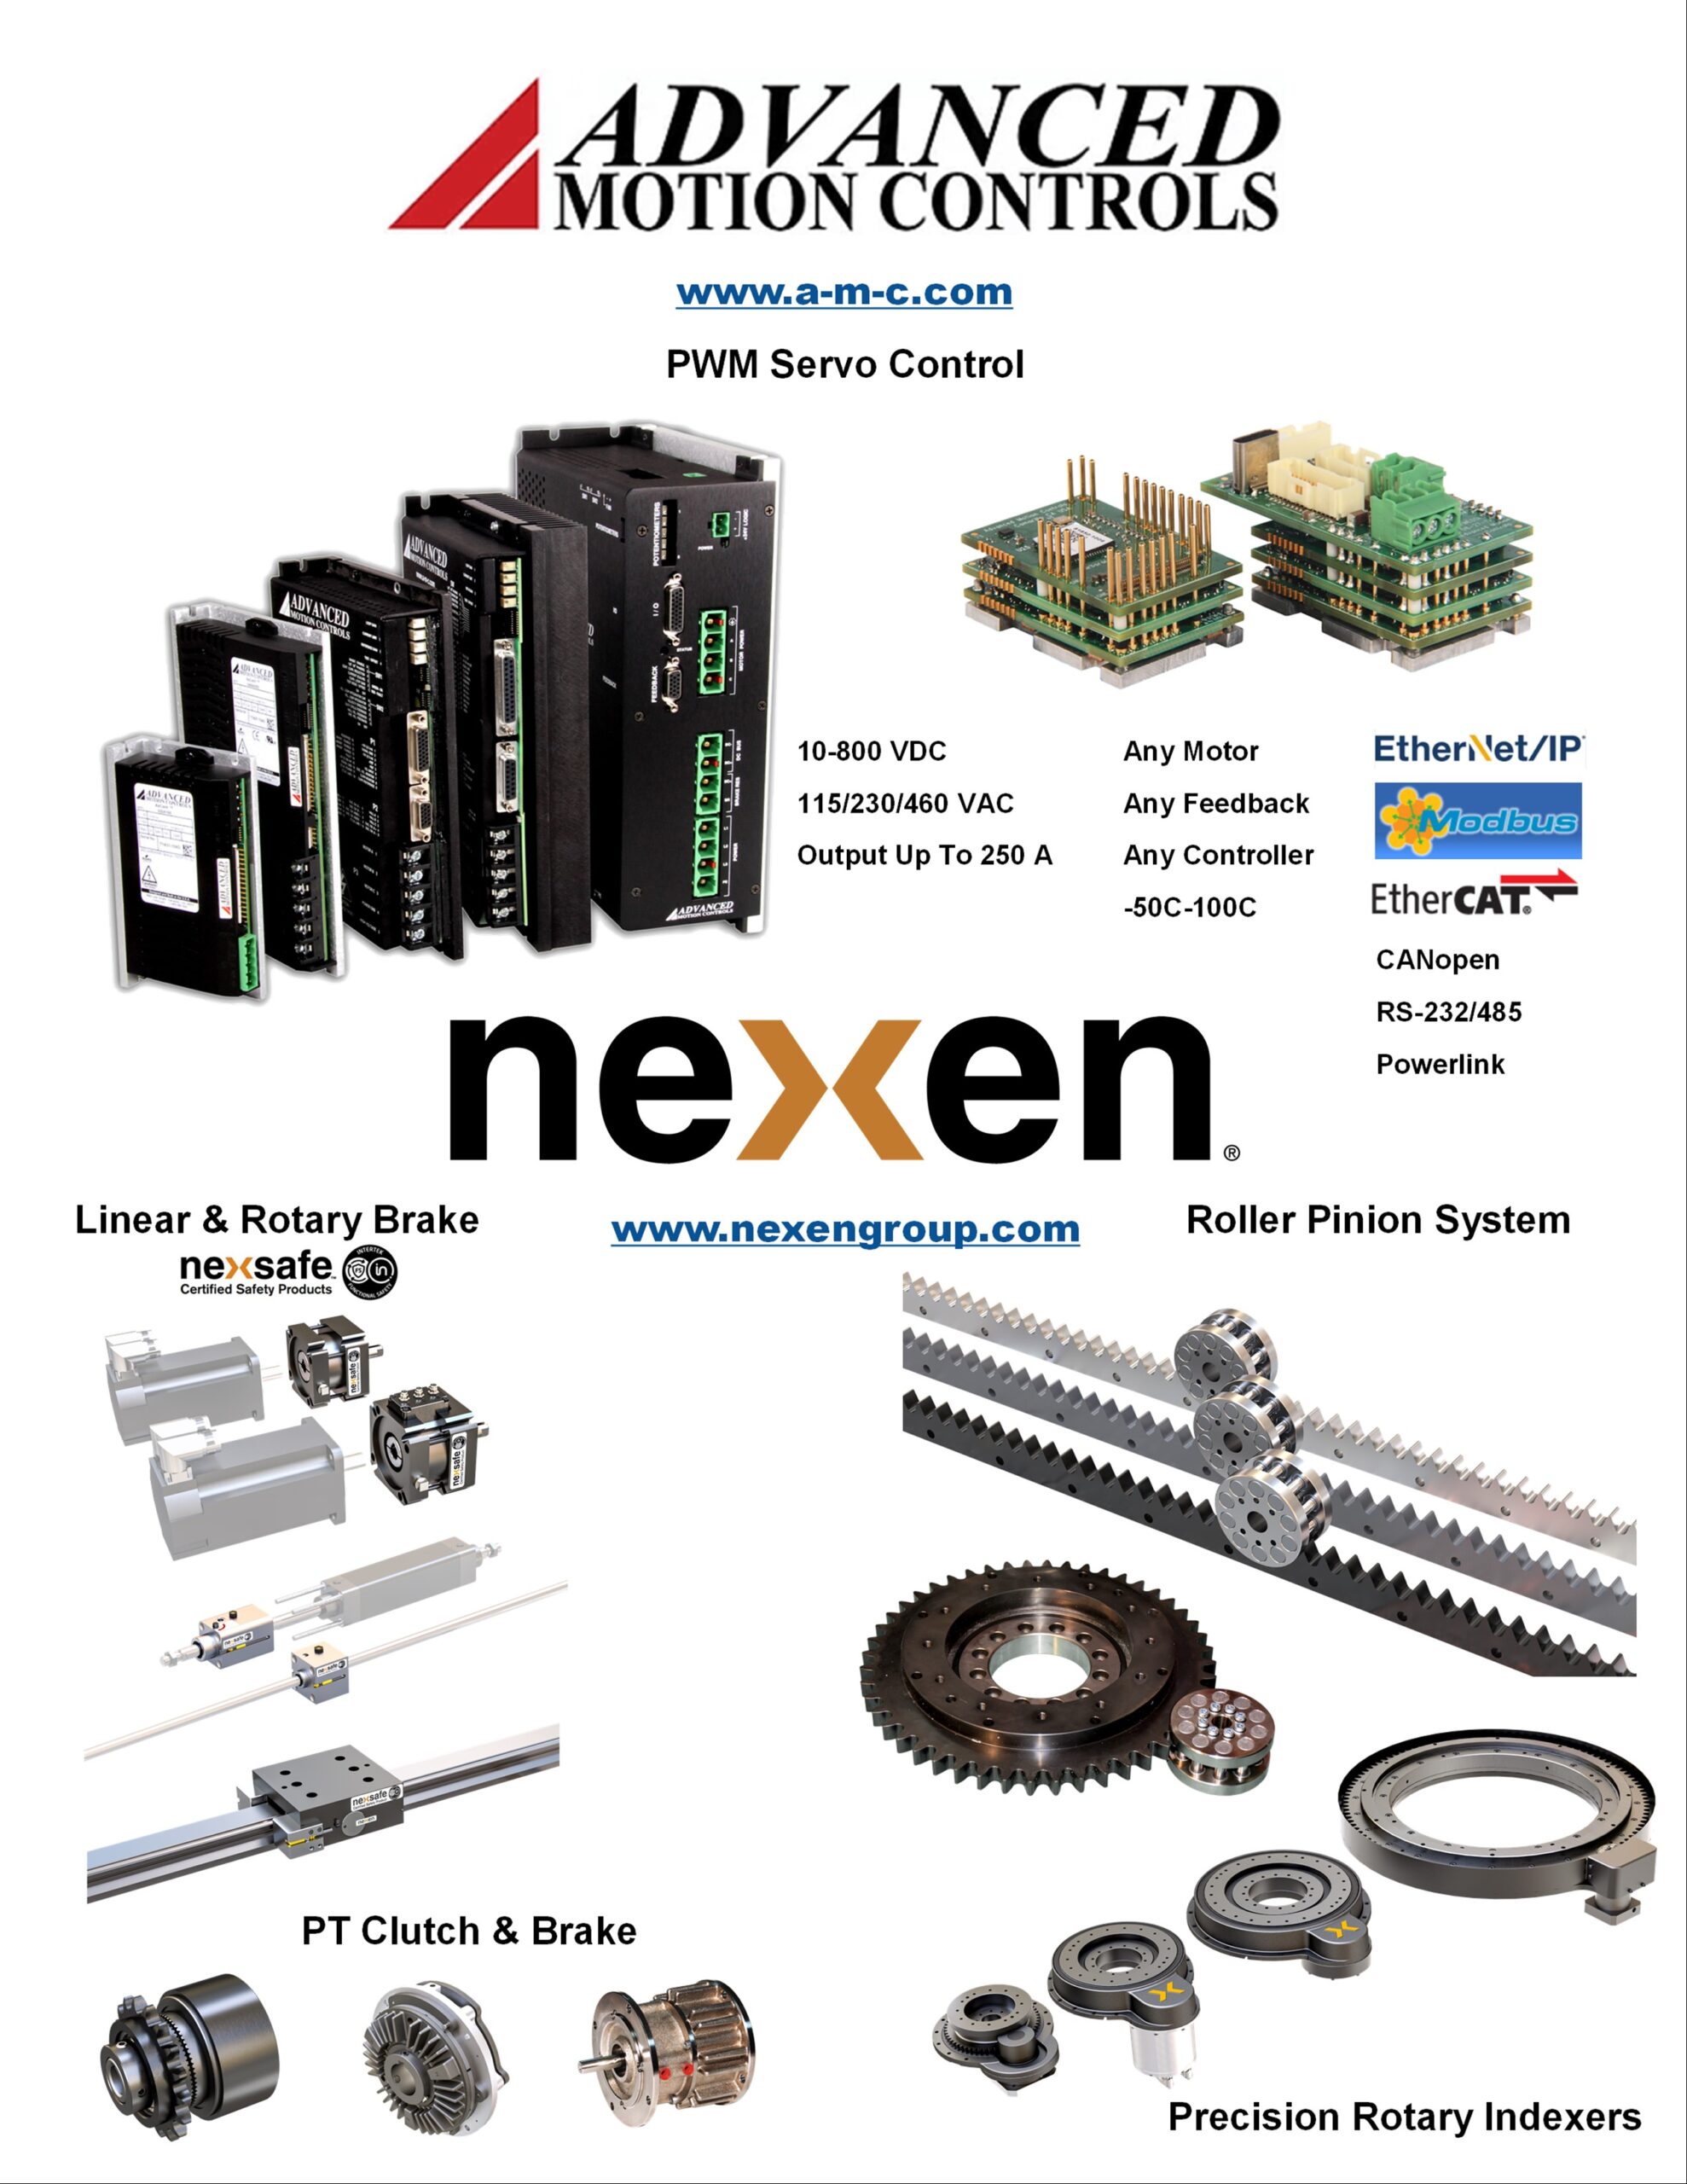 Advanced Motion Controls and Nexen